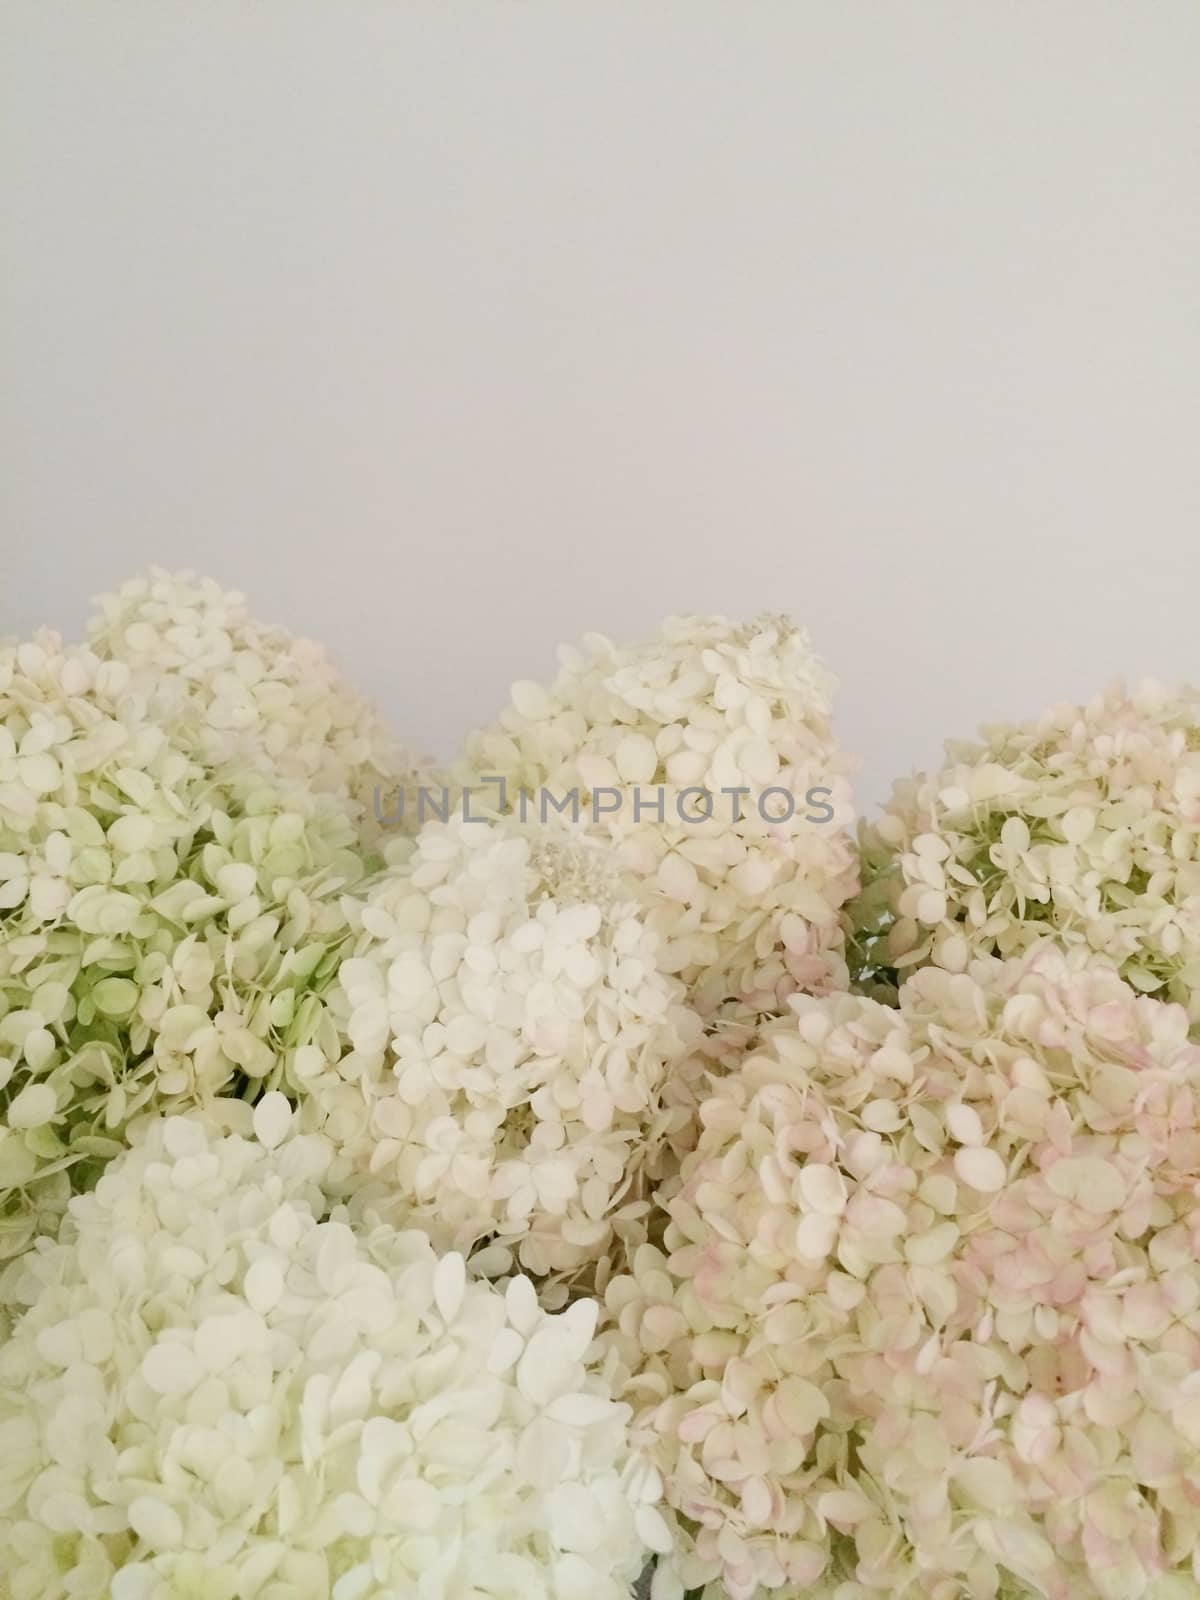 Bouquet of white hydrangeas closeup